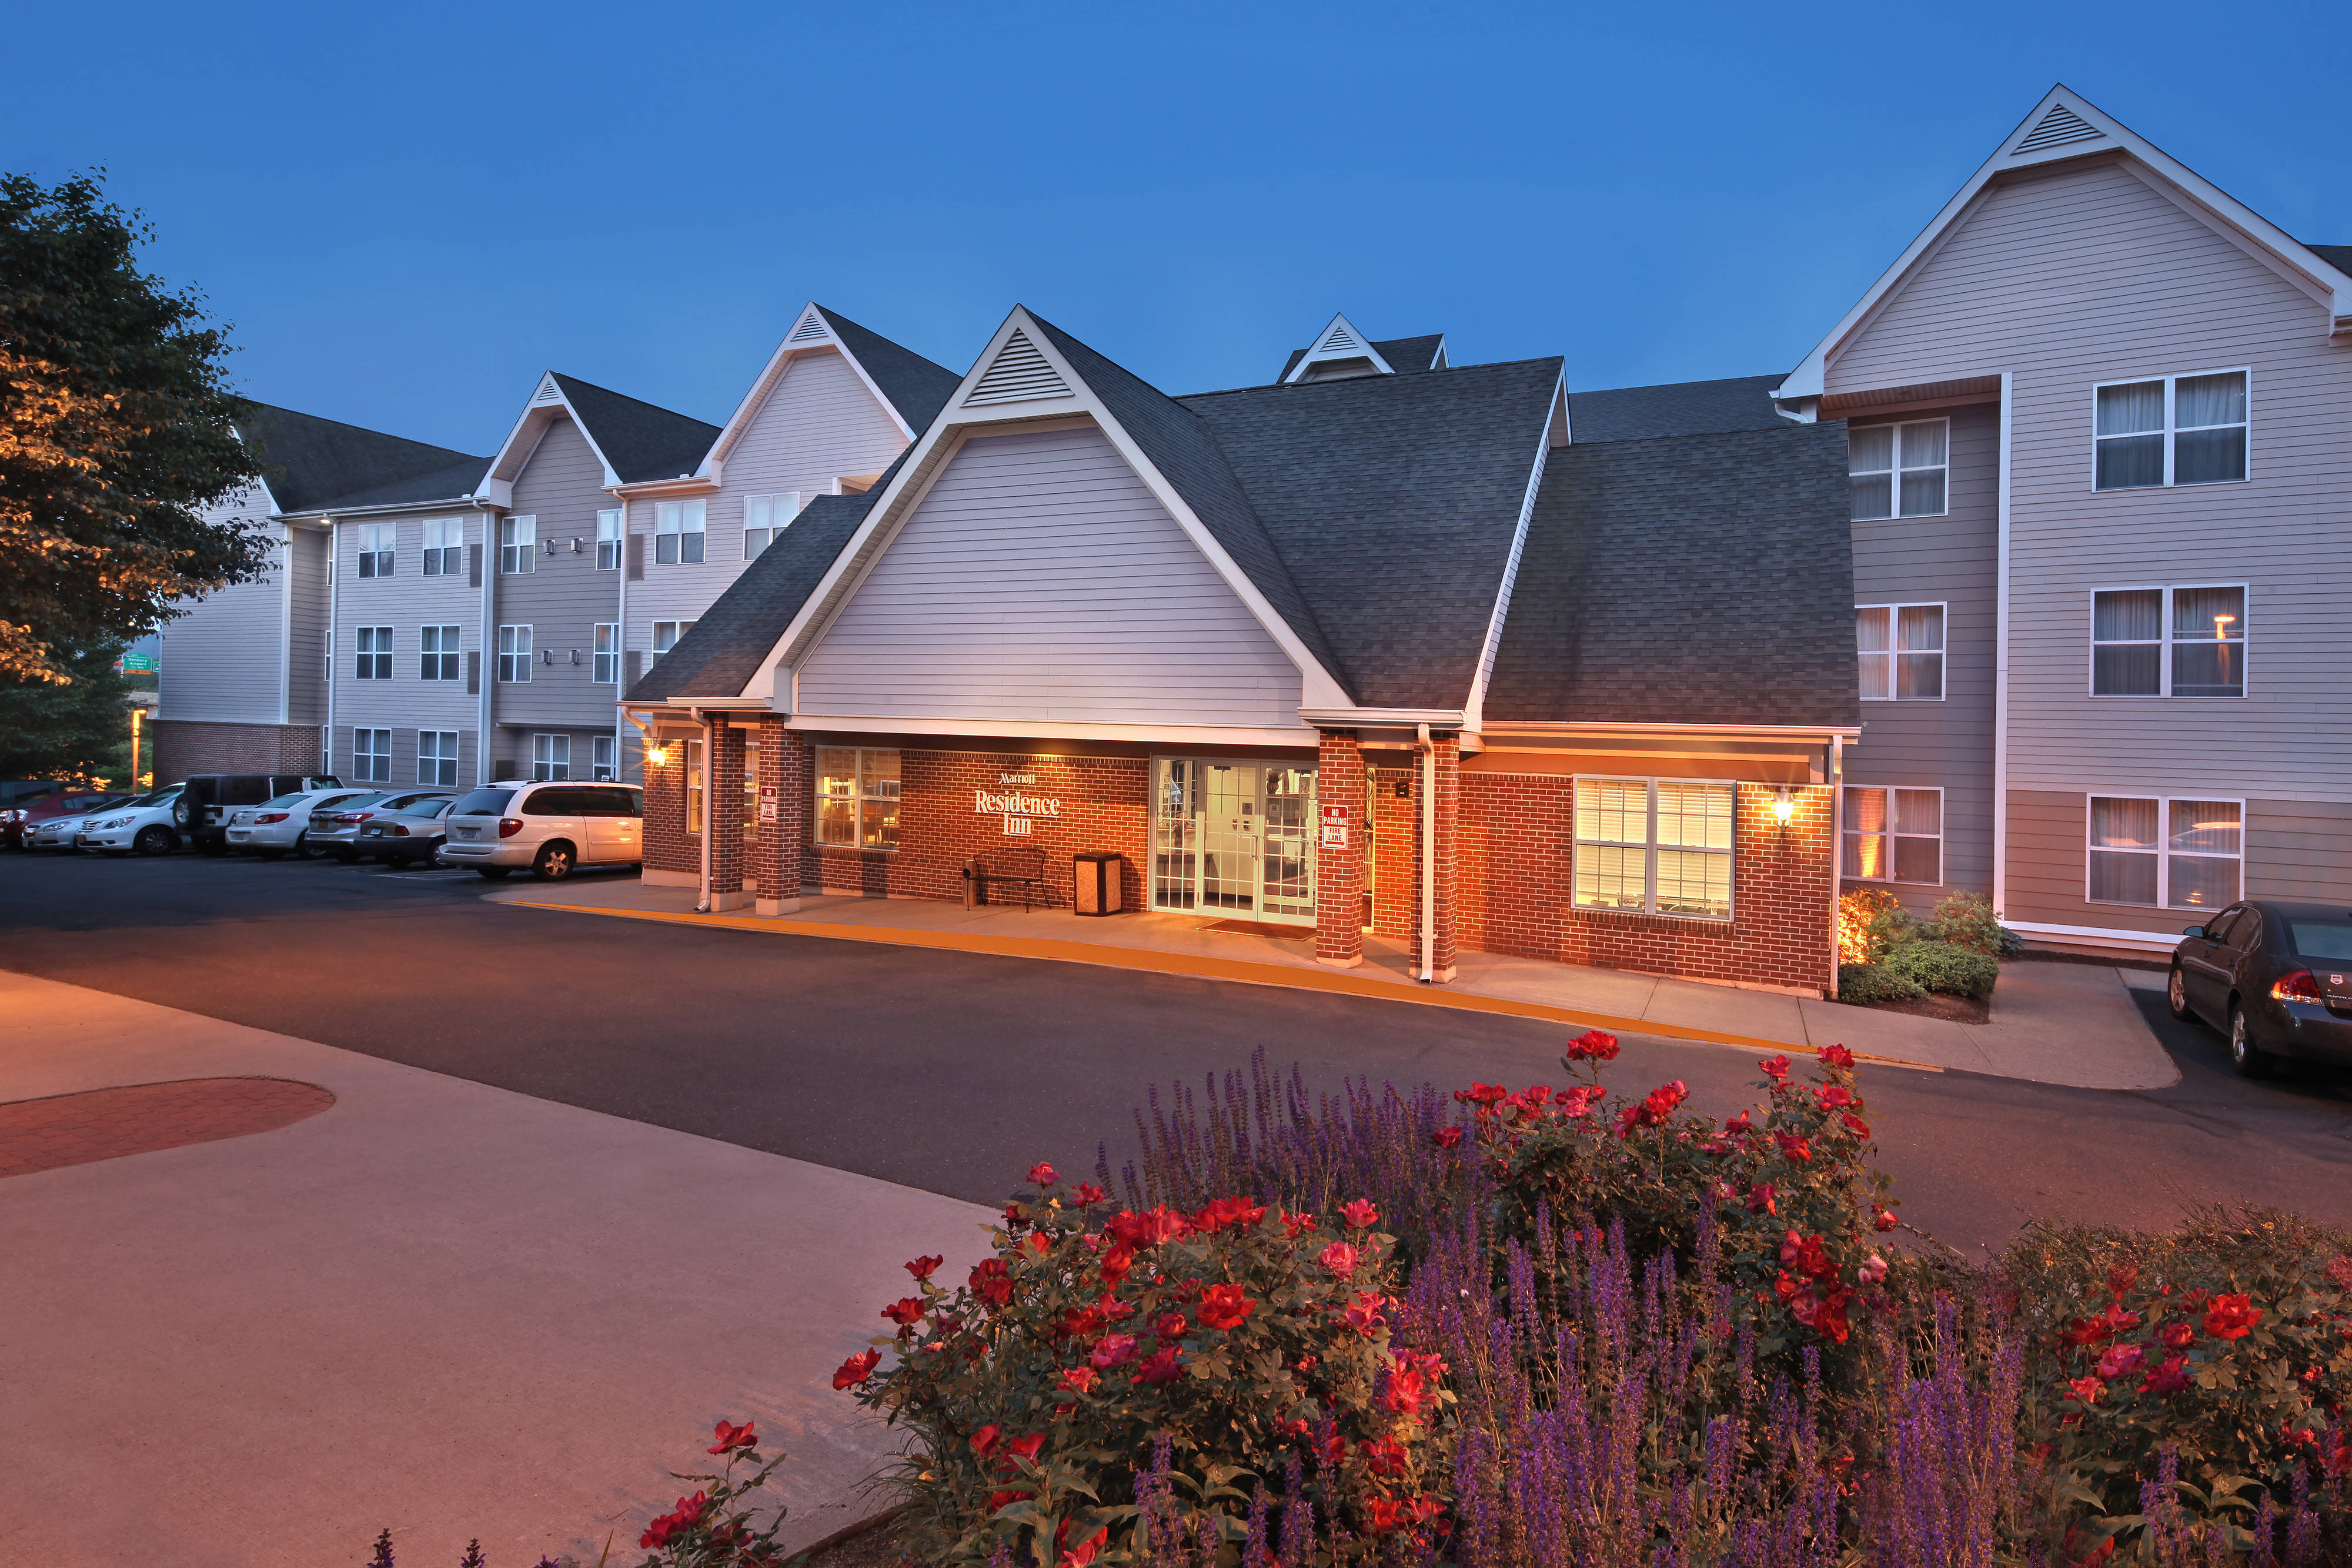 Photo of Residence inn by Marriott Danbury, Danbury, CT